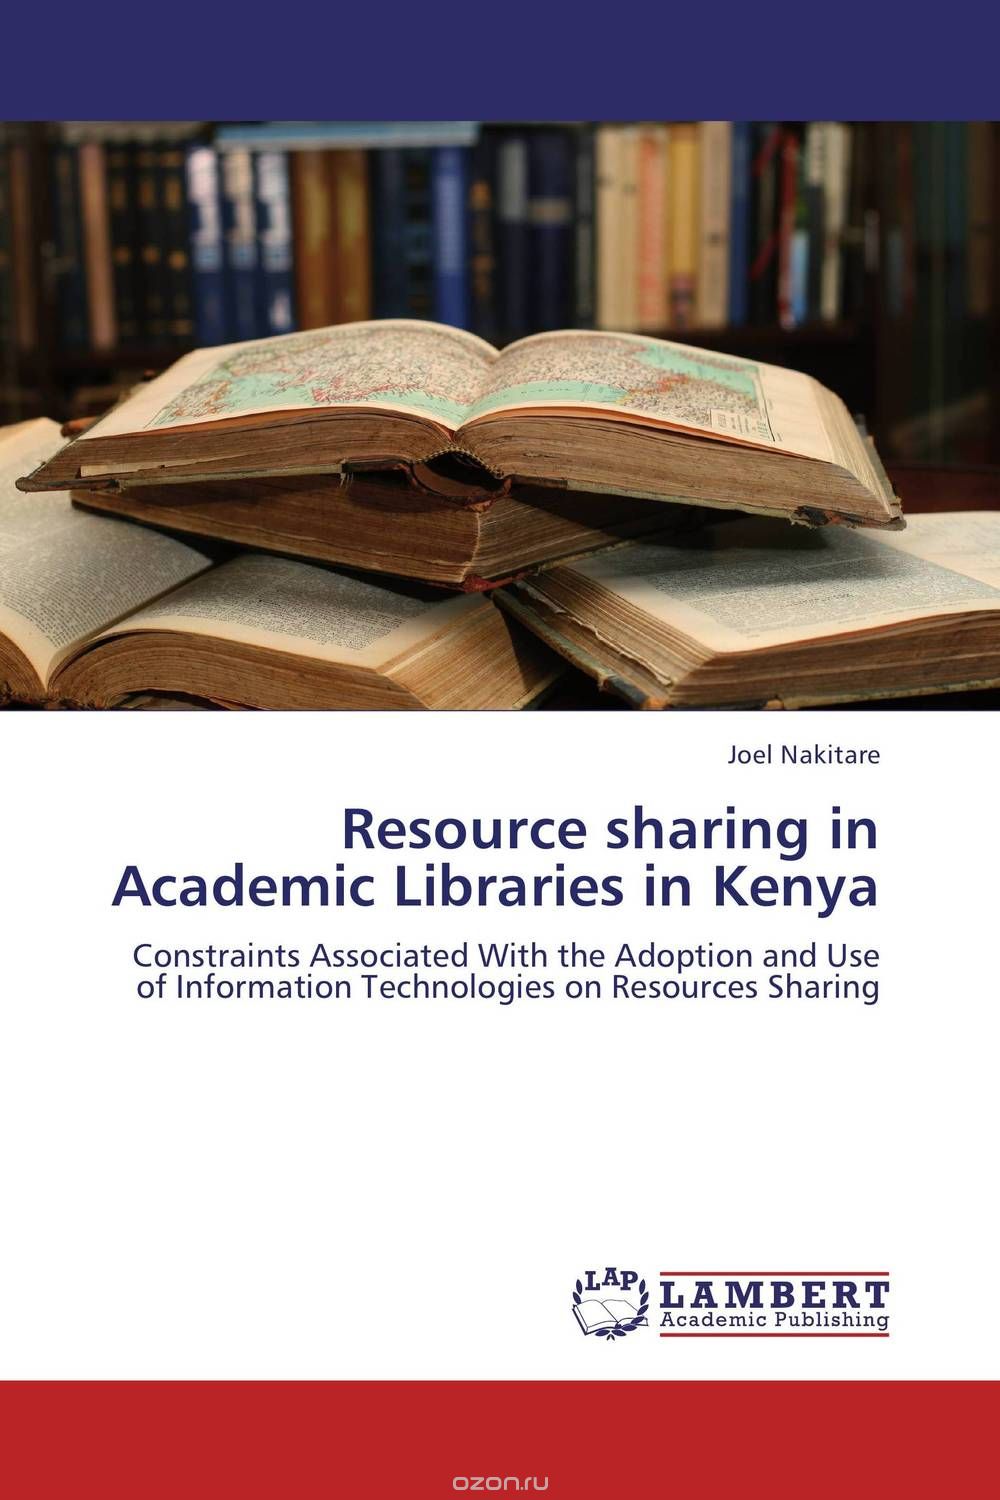 Resource sharing in Academic Libraries in Kenya